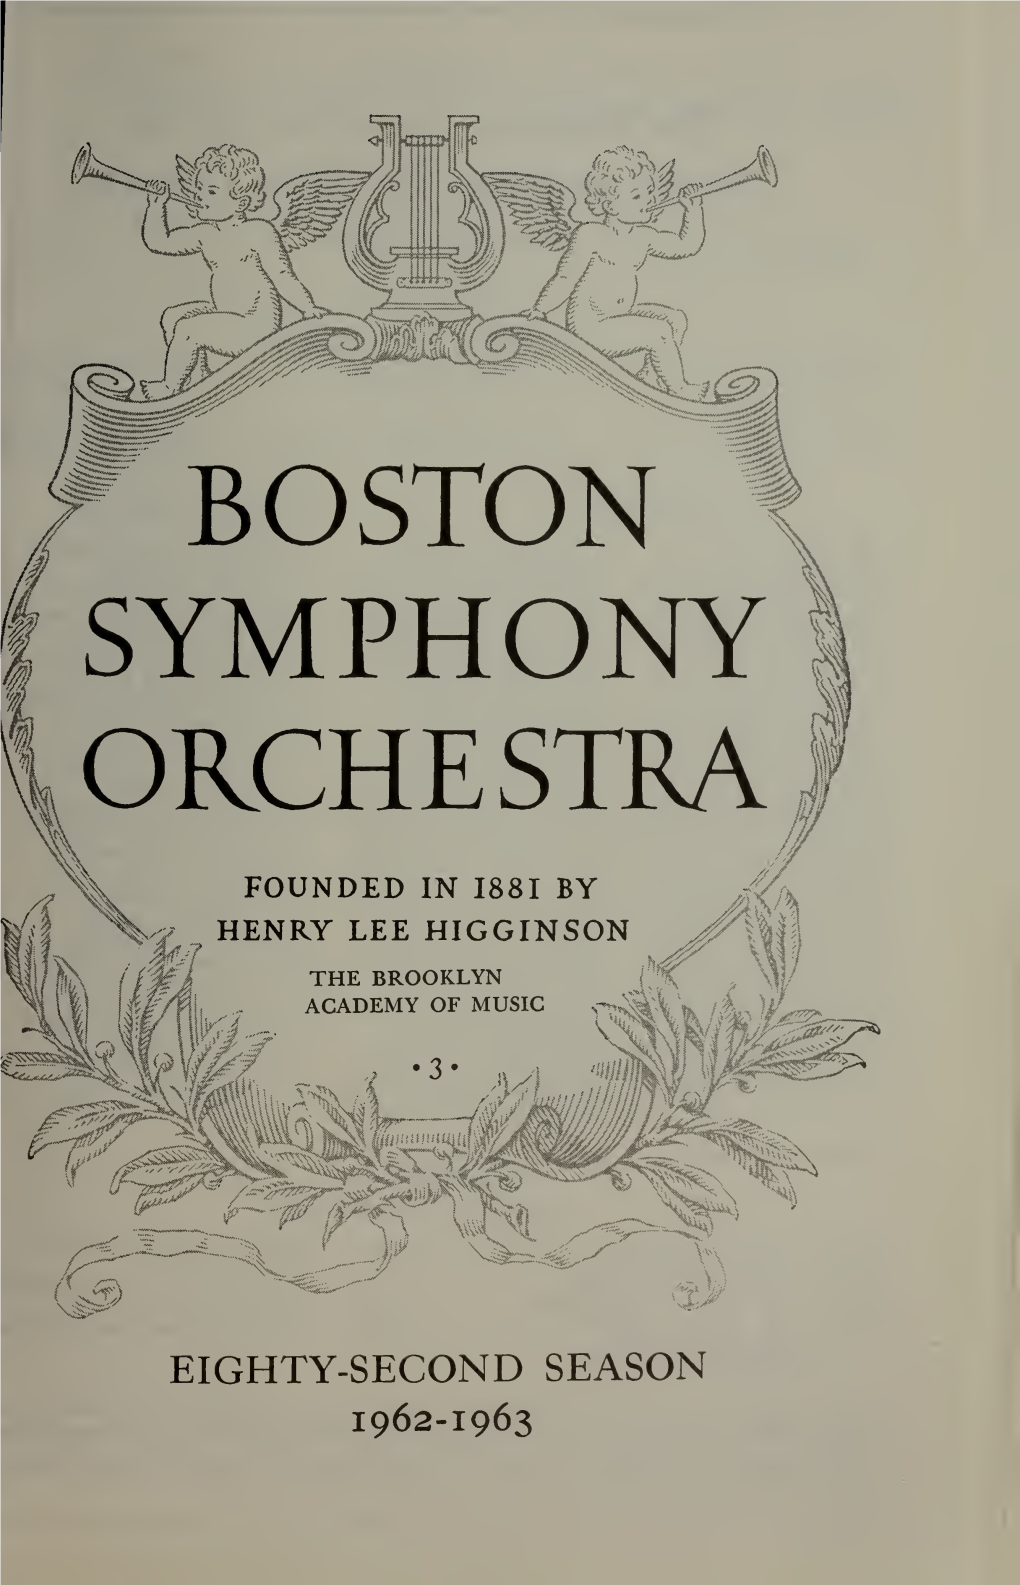 Boston Symphony Orchestra Concert Programs, Season 82, 1962